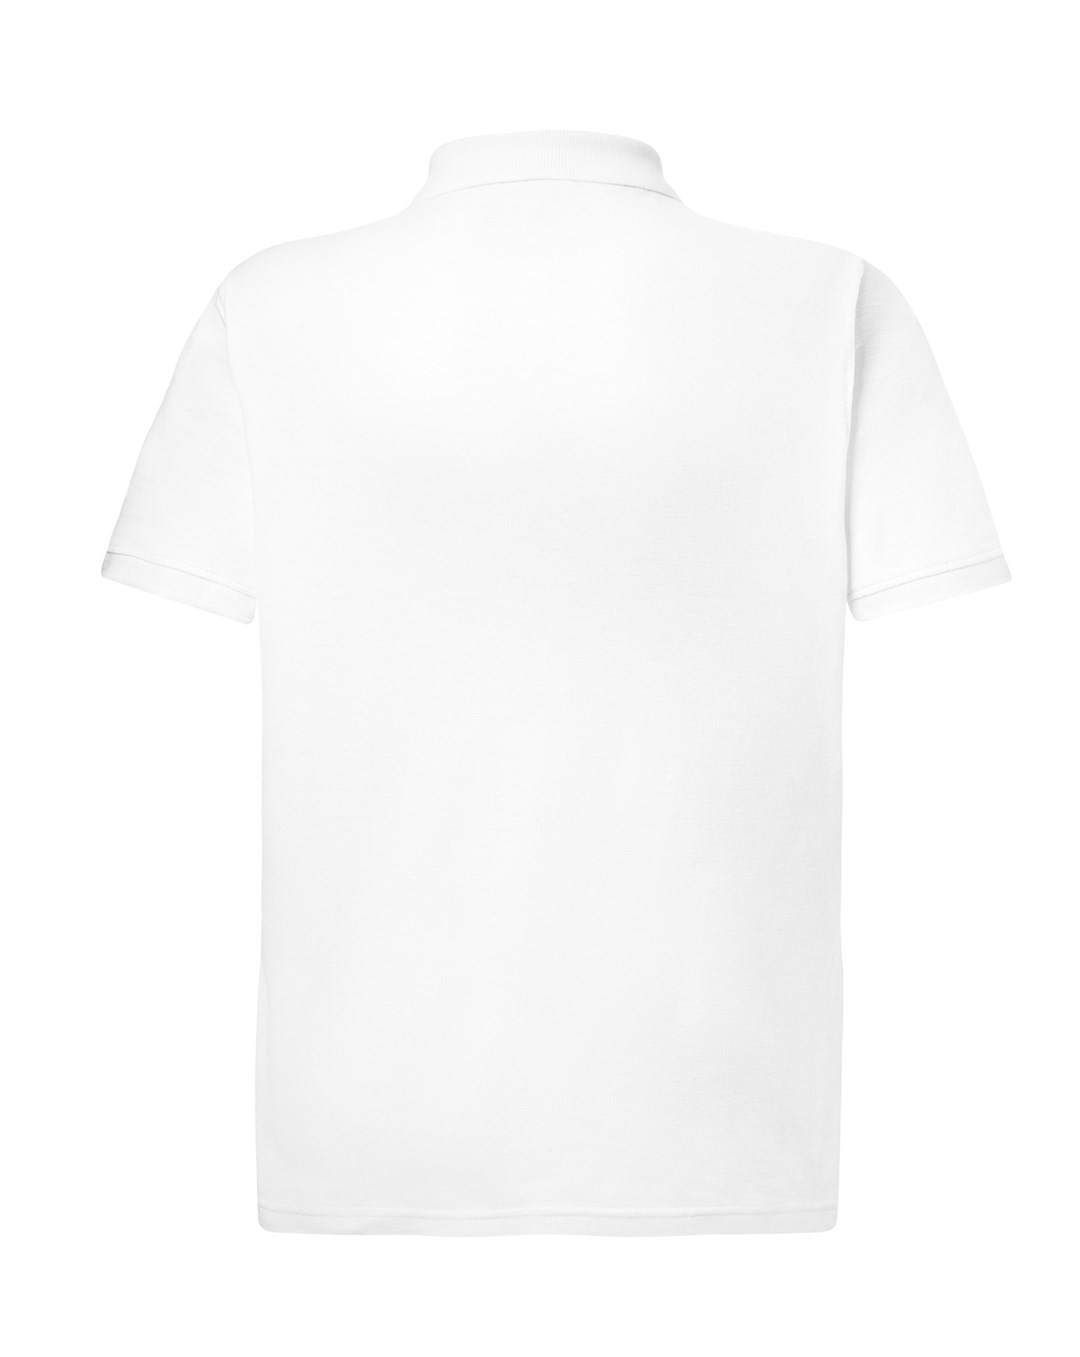 T-shirt Polo for printing for printing